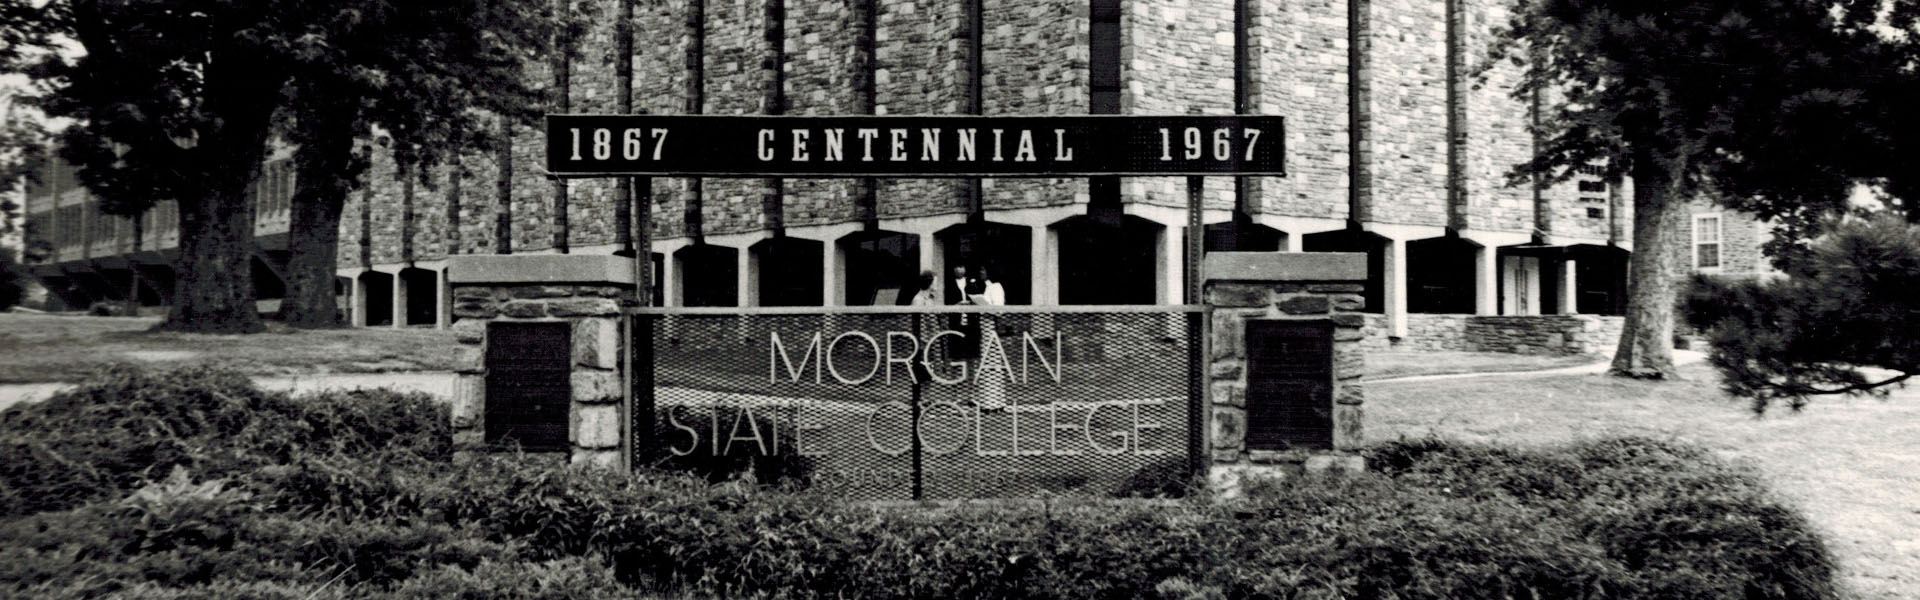 Morgan State College signage